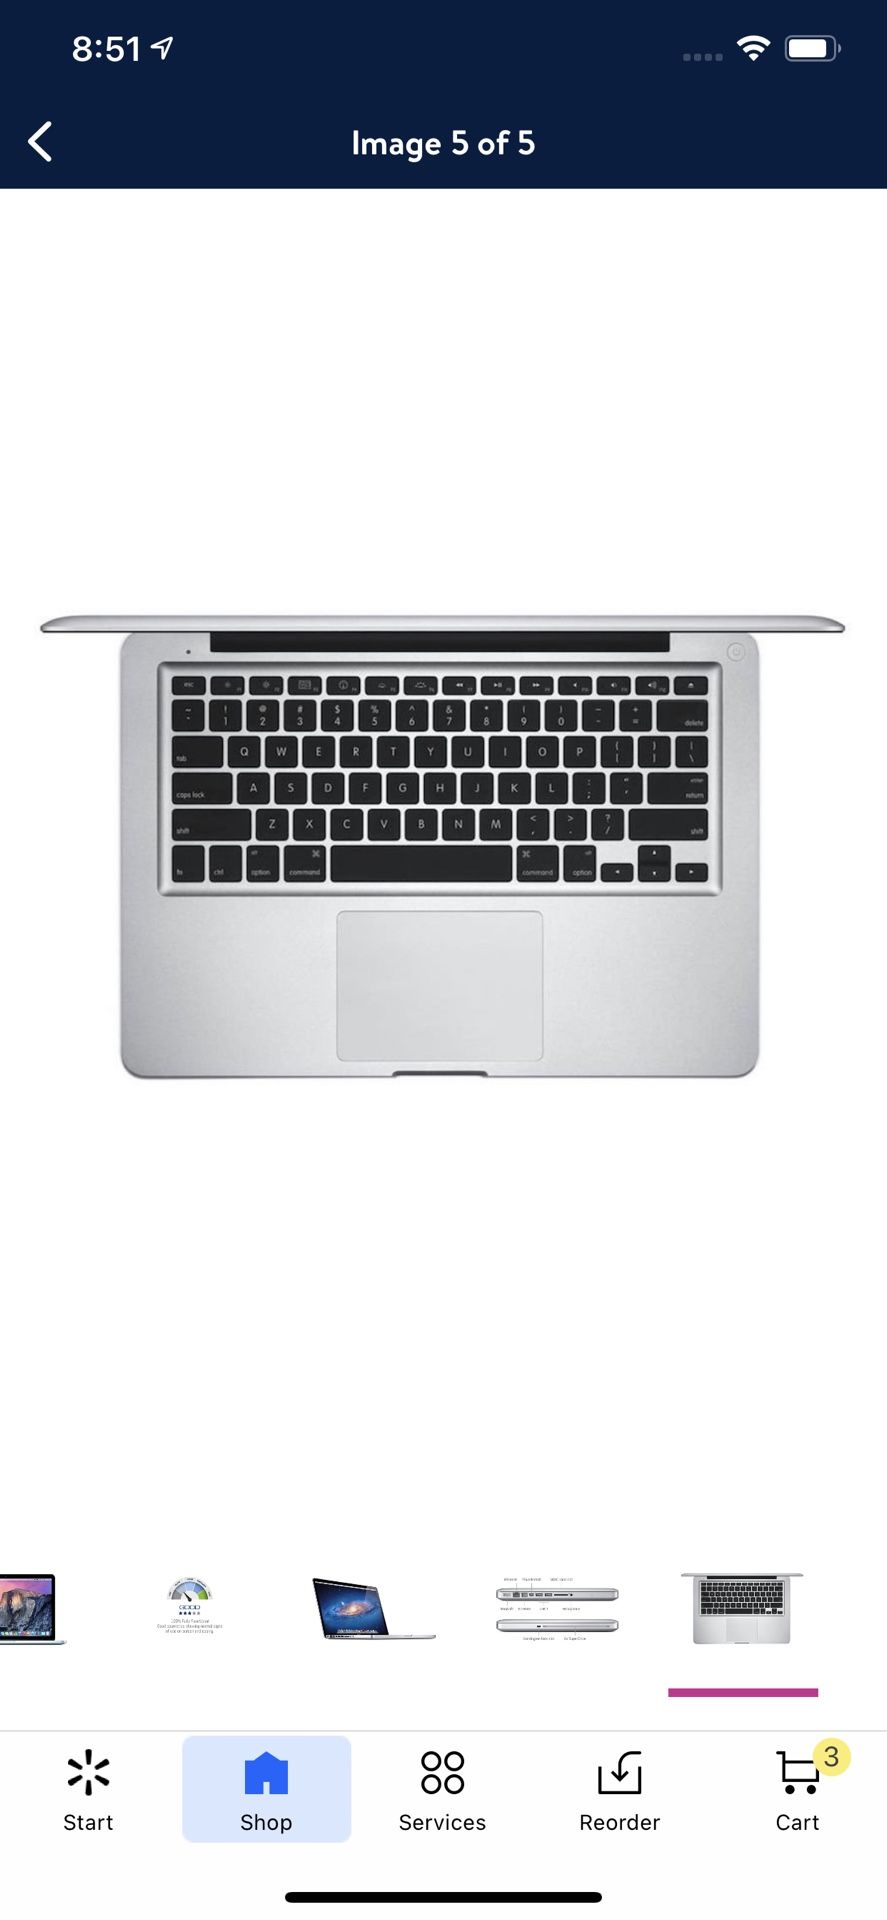 Refurbished Apple MacBook Pro 13.3 Laptop LED Intel i5 3210M 2.5GHz 4GB 500GB - MD101LLA